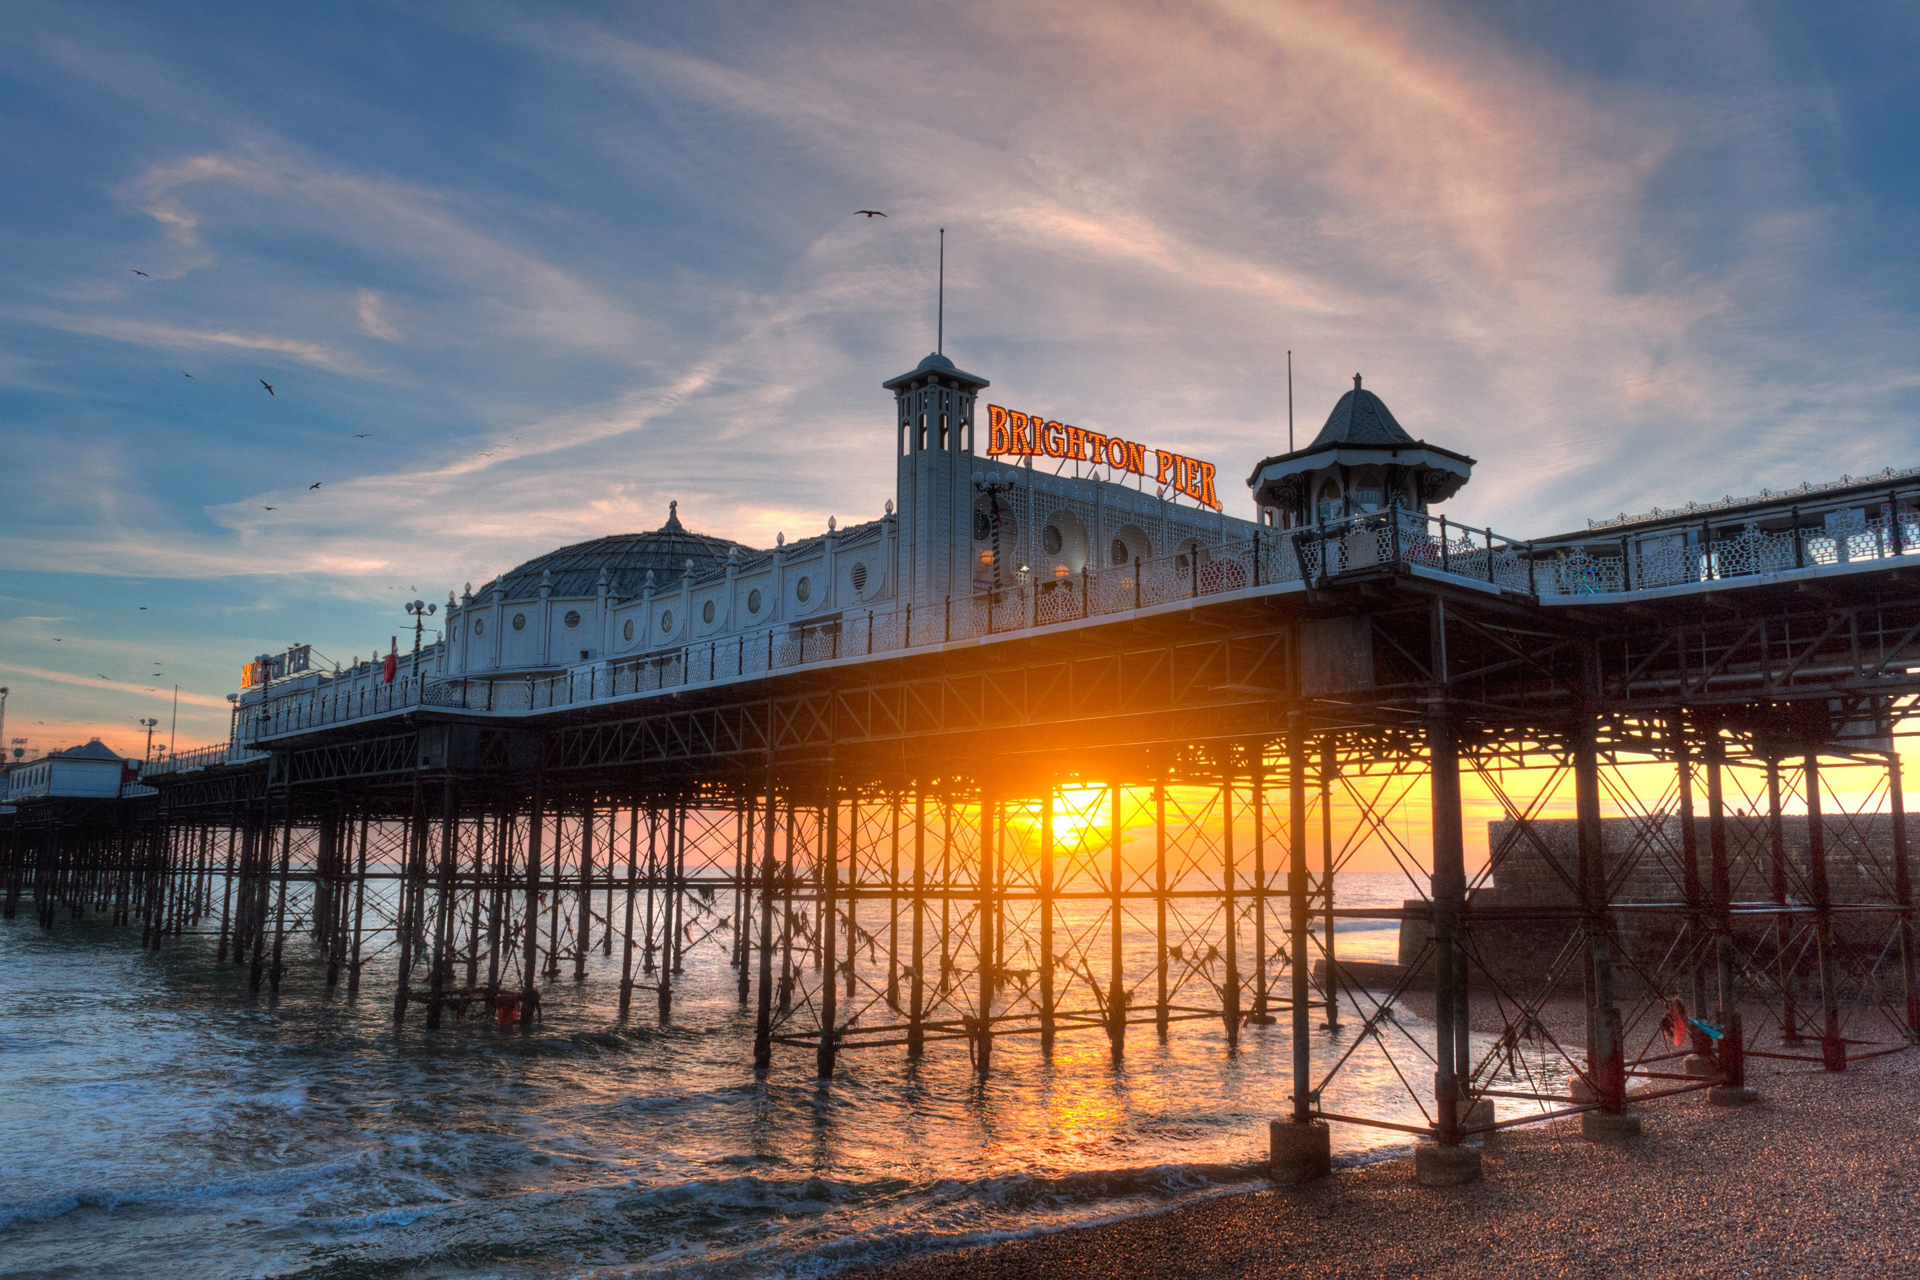 Brighton pier at sunset